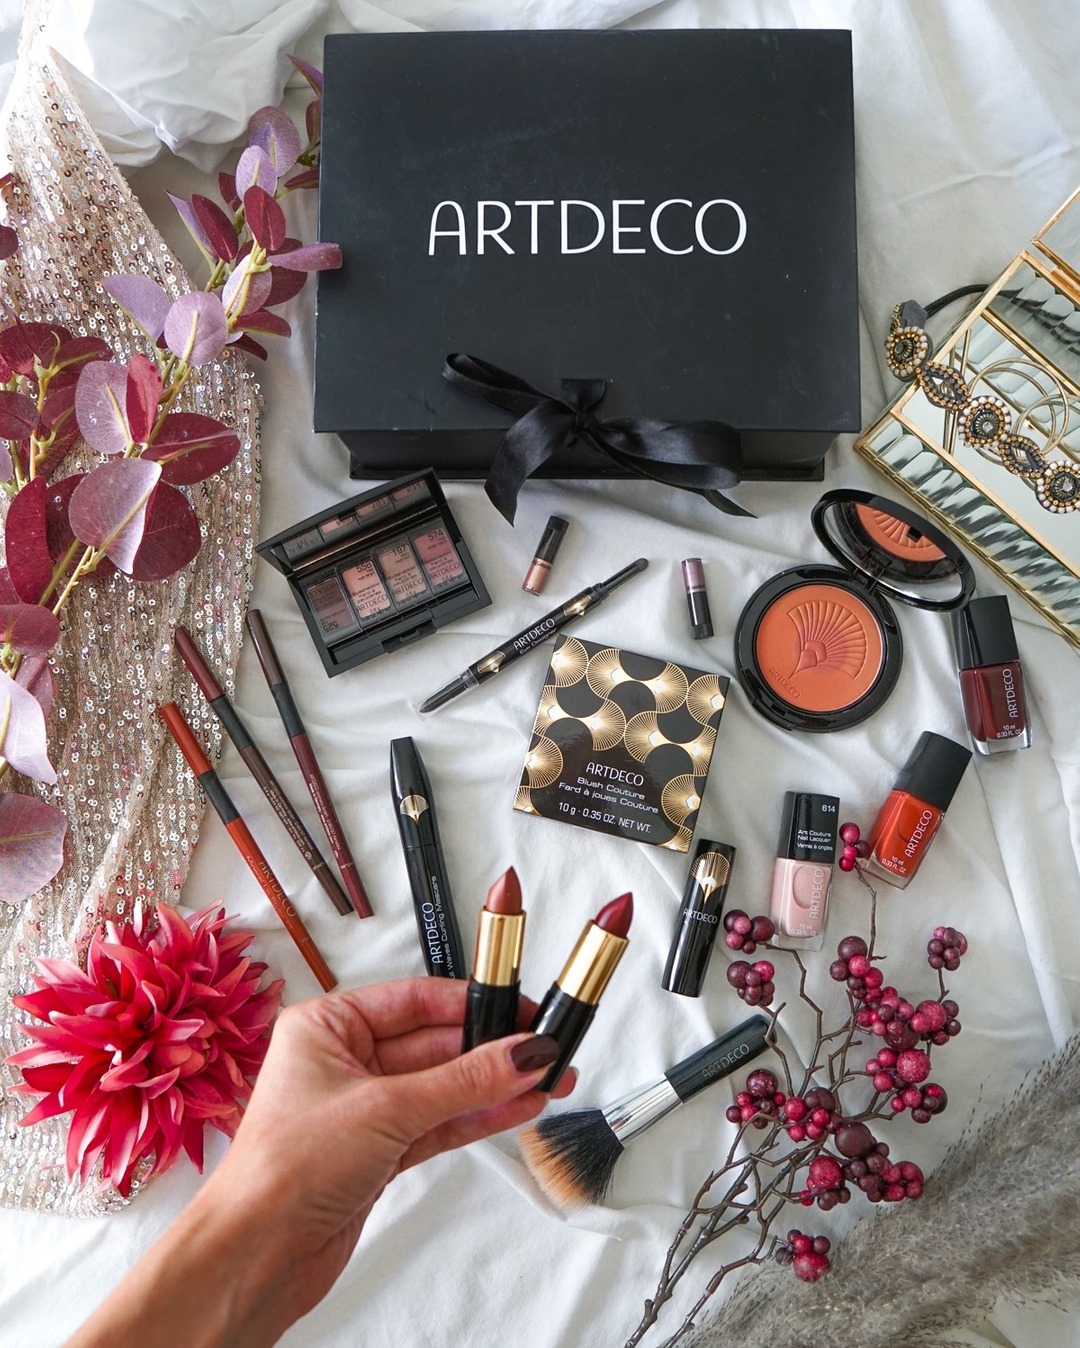 ARTDECO - Our lovely @inspirationdelavie draws attention to our new collection ENTER THE NEW GOLDEN TWENTIES. We love it!⠀⠀⠀⠀⠀⠀⠀⠀⠀
⠀⠀⠀⠀⠀⠀⠀⠀⠀
#artdecocosmetics #enterthenewgoldentwenties #artdecobeauti...